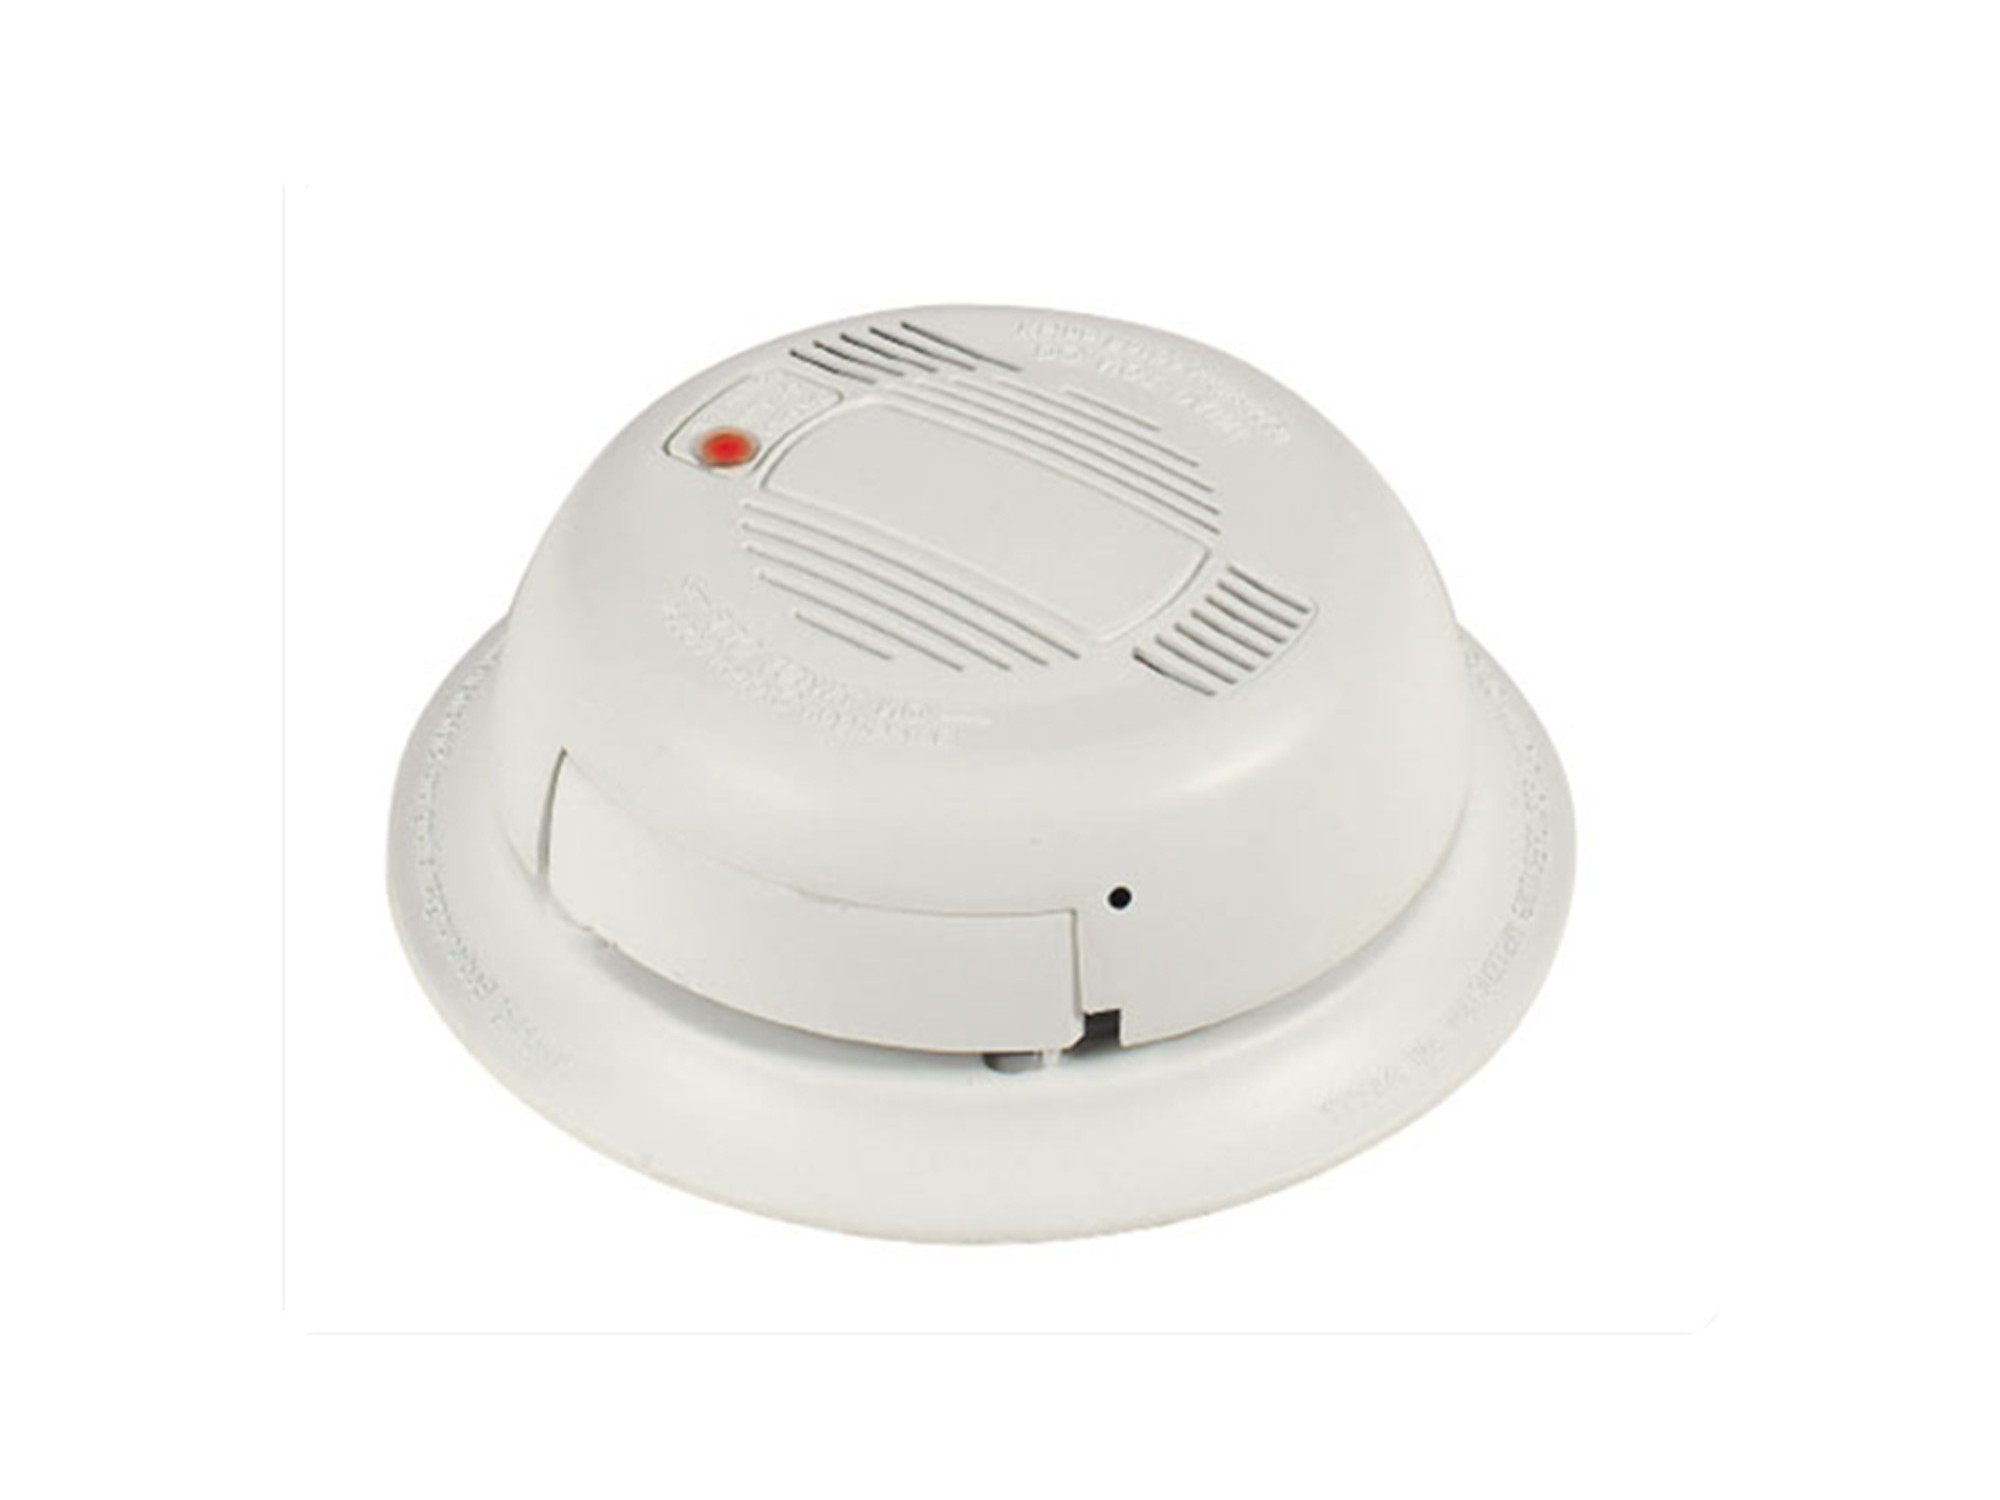 HD-14C11 1080P hybrid smoke alarm detector camera